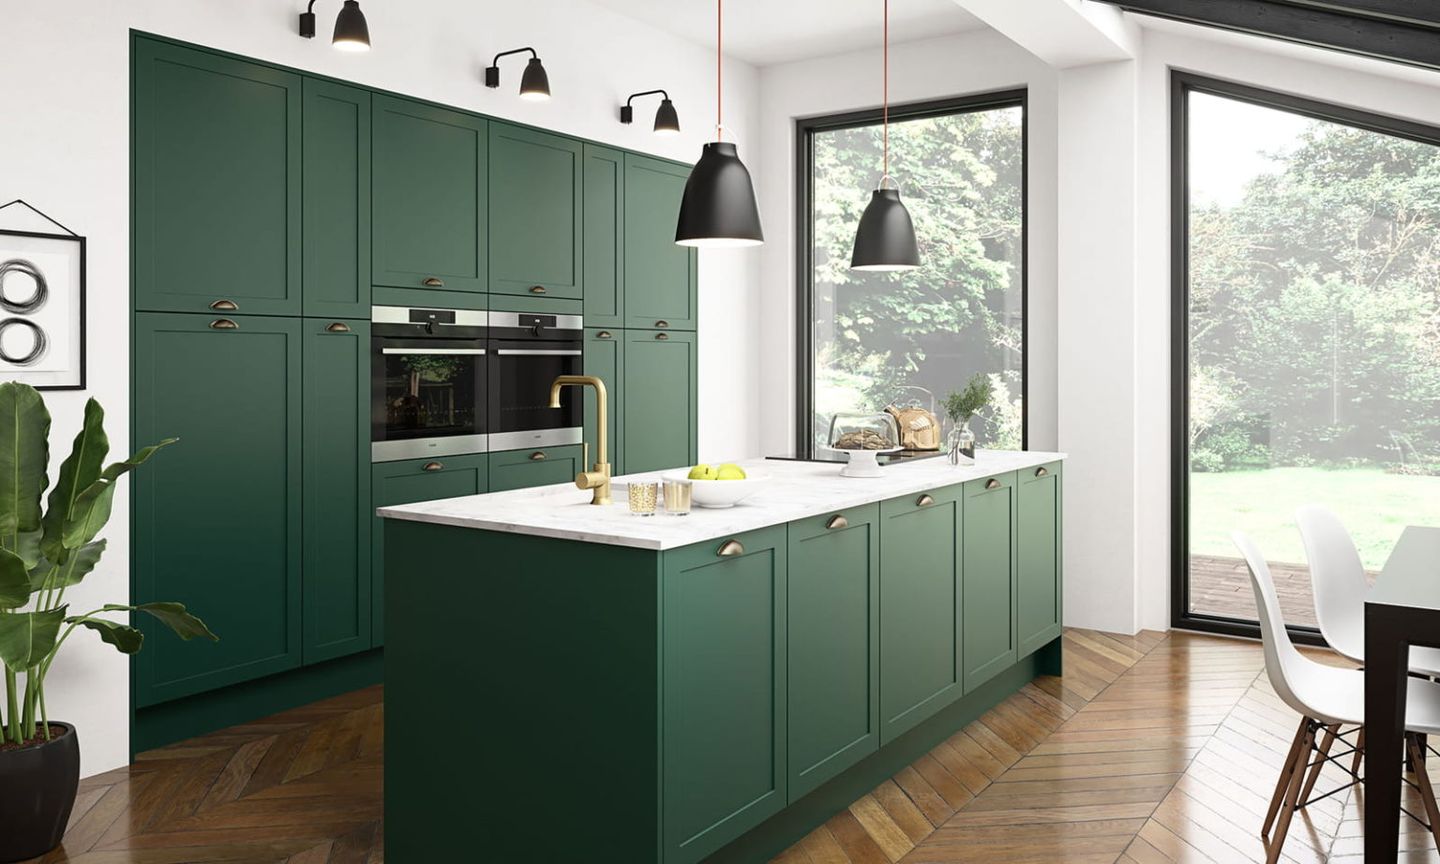 Penggunaan warna hijau pada kitchen set memberi kesan mewah dan aesthetic.